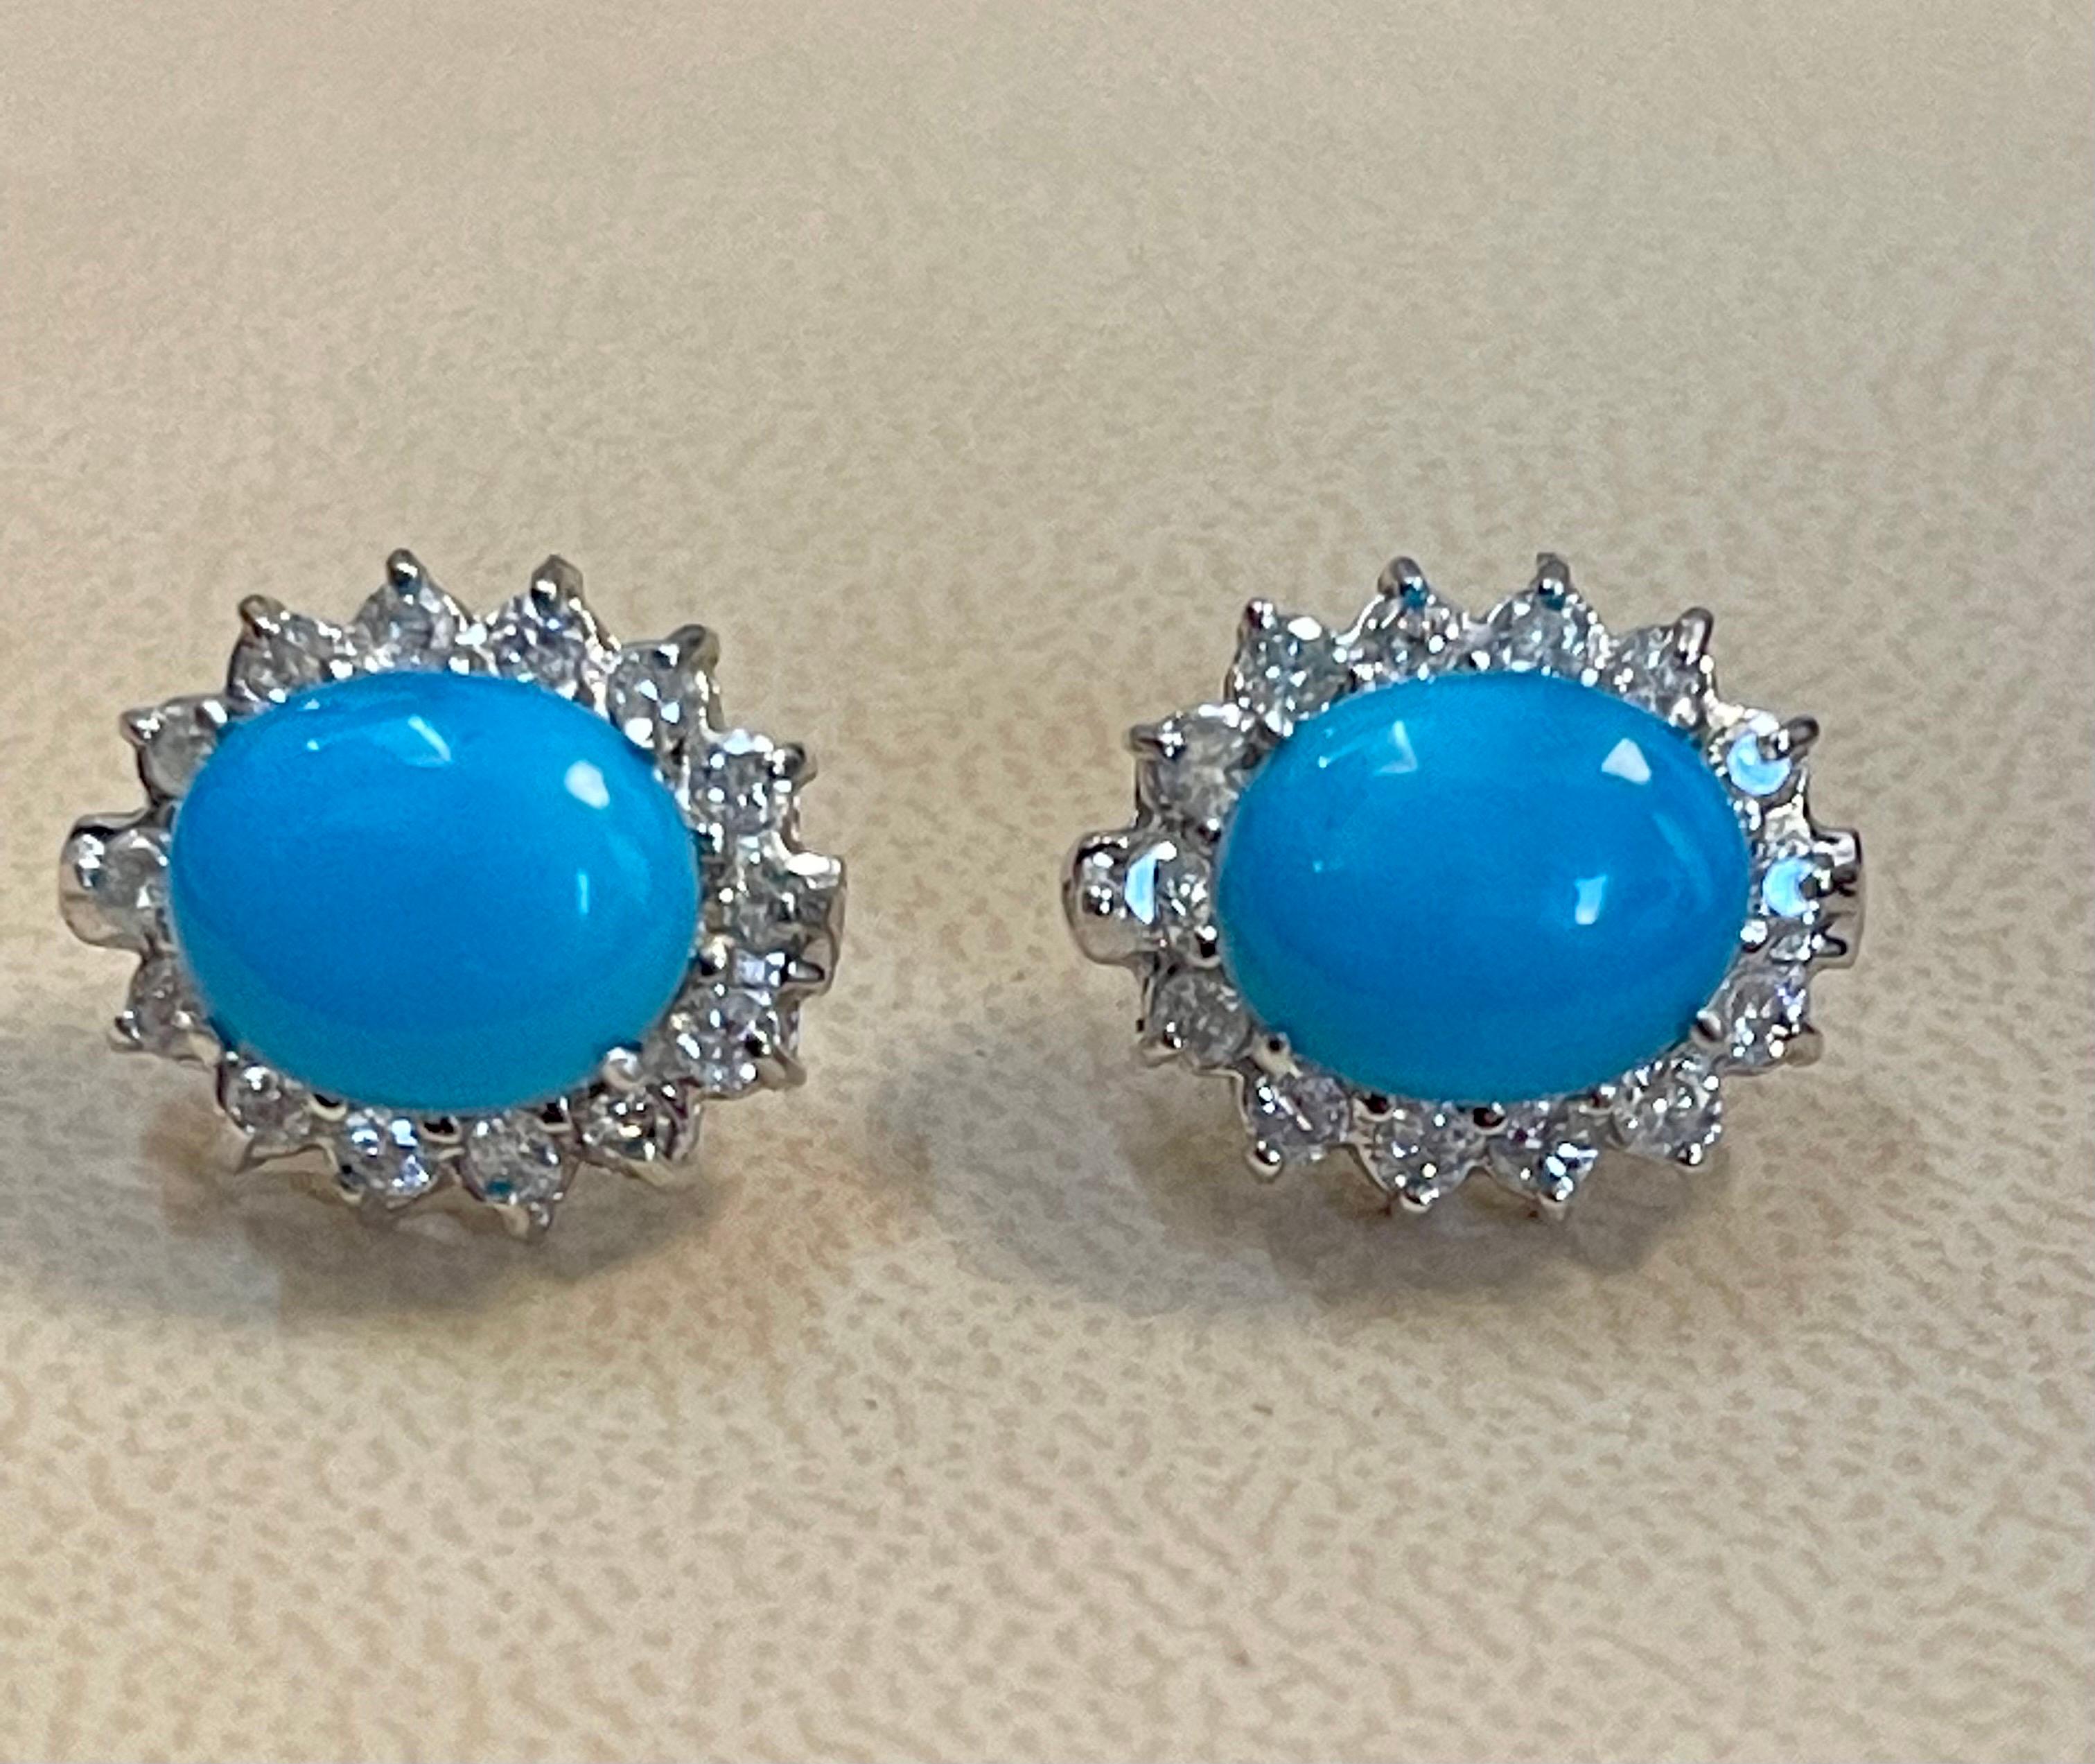 Oval Cut 8 Ct Oval Sleeping Beauty Turquoise & 1 Ct Diamond Stud Earrings 14 K White Gold